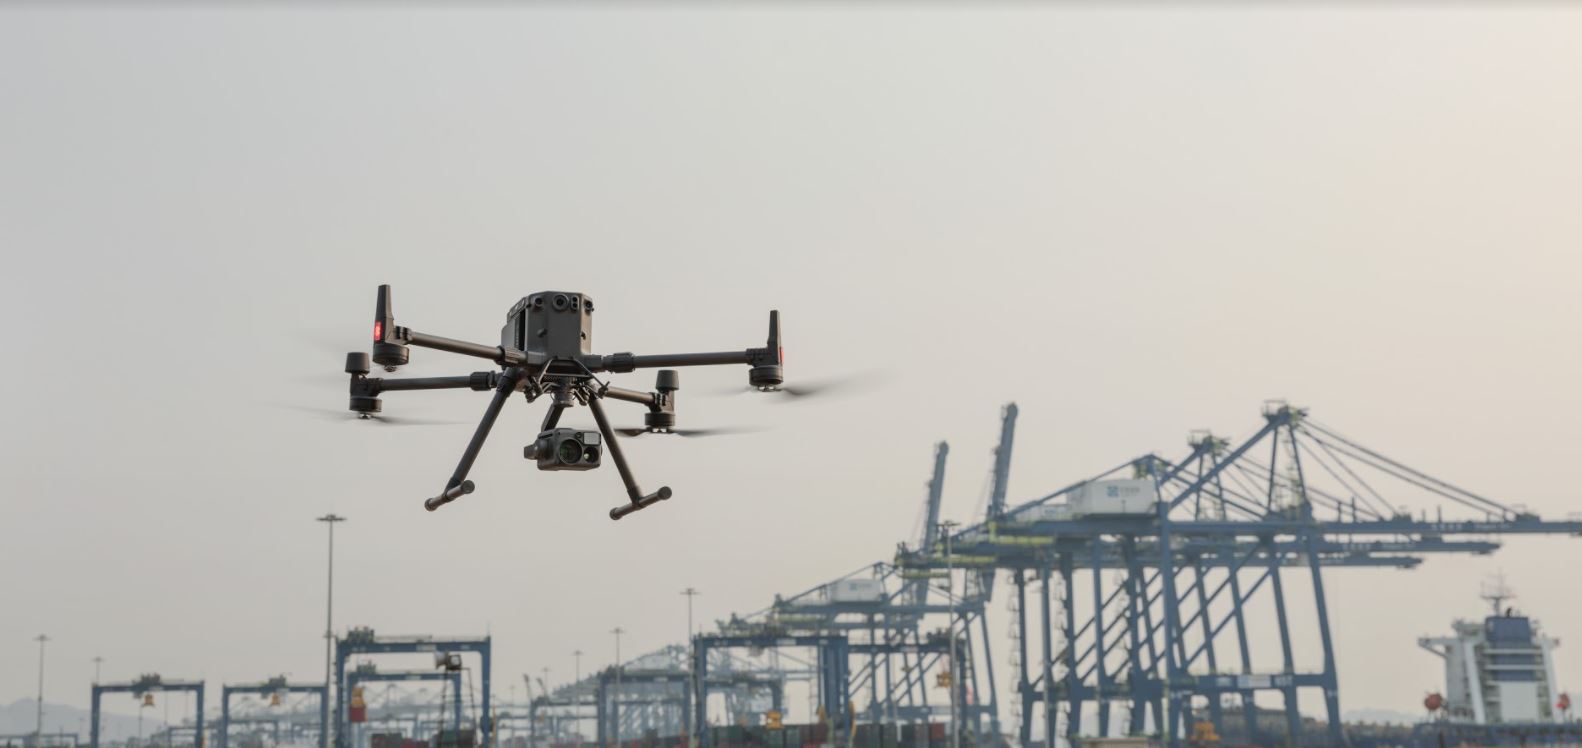 Kaspersky Antidrone — защита воздушного пространства от дронов